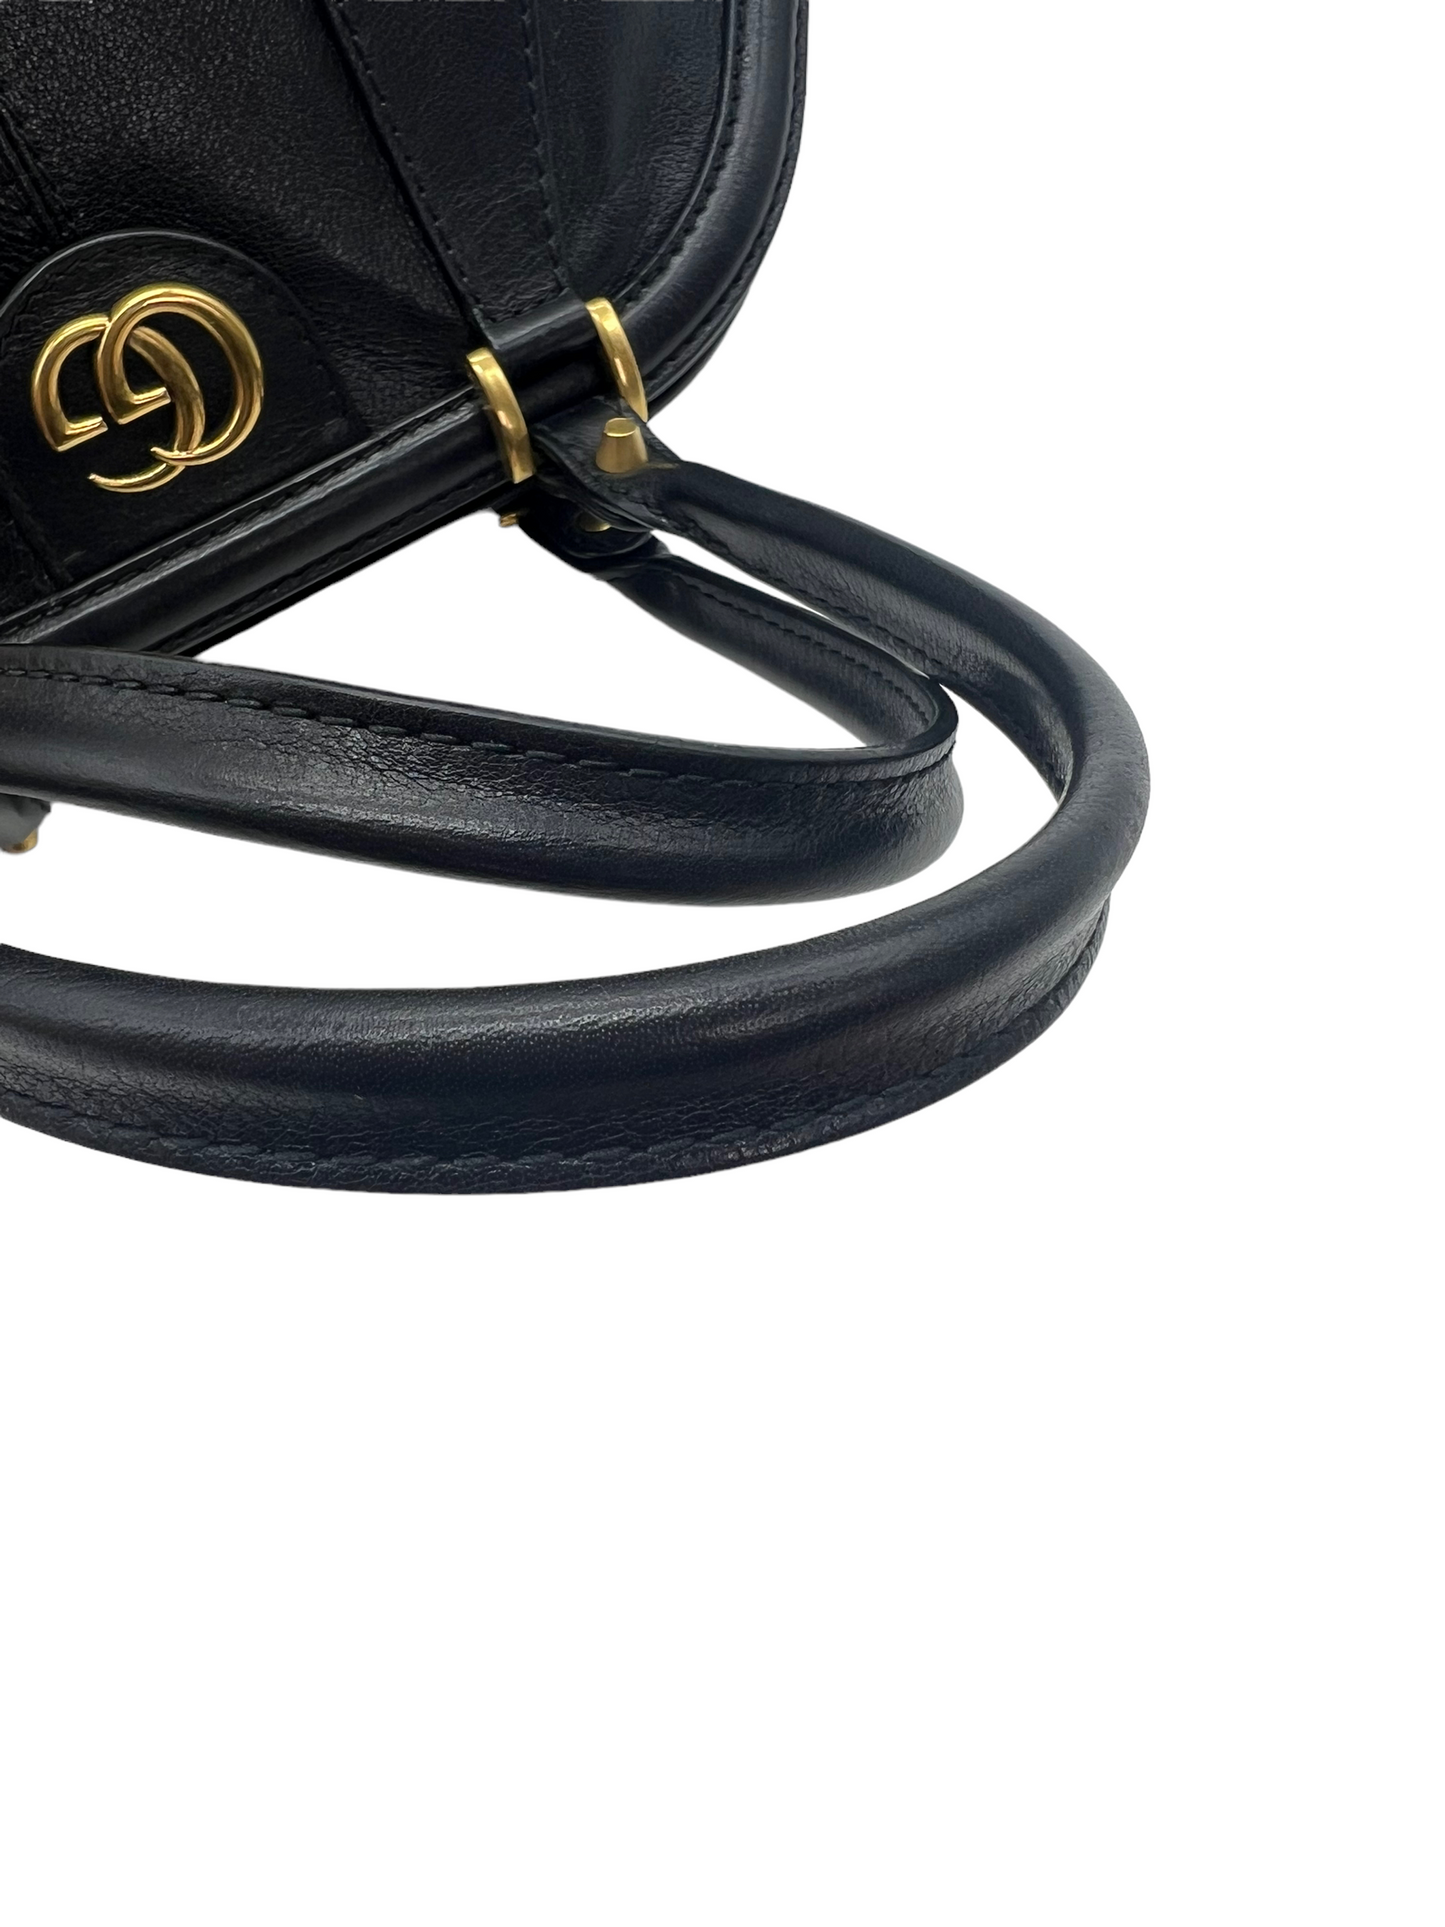 Gucci Black Leather Large Re(Belle) Dome Satchel